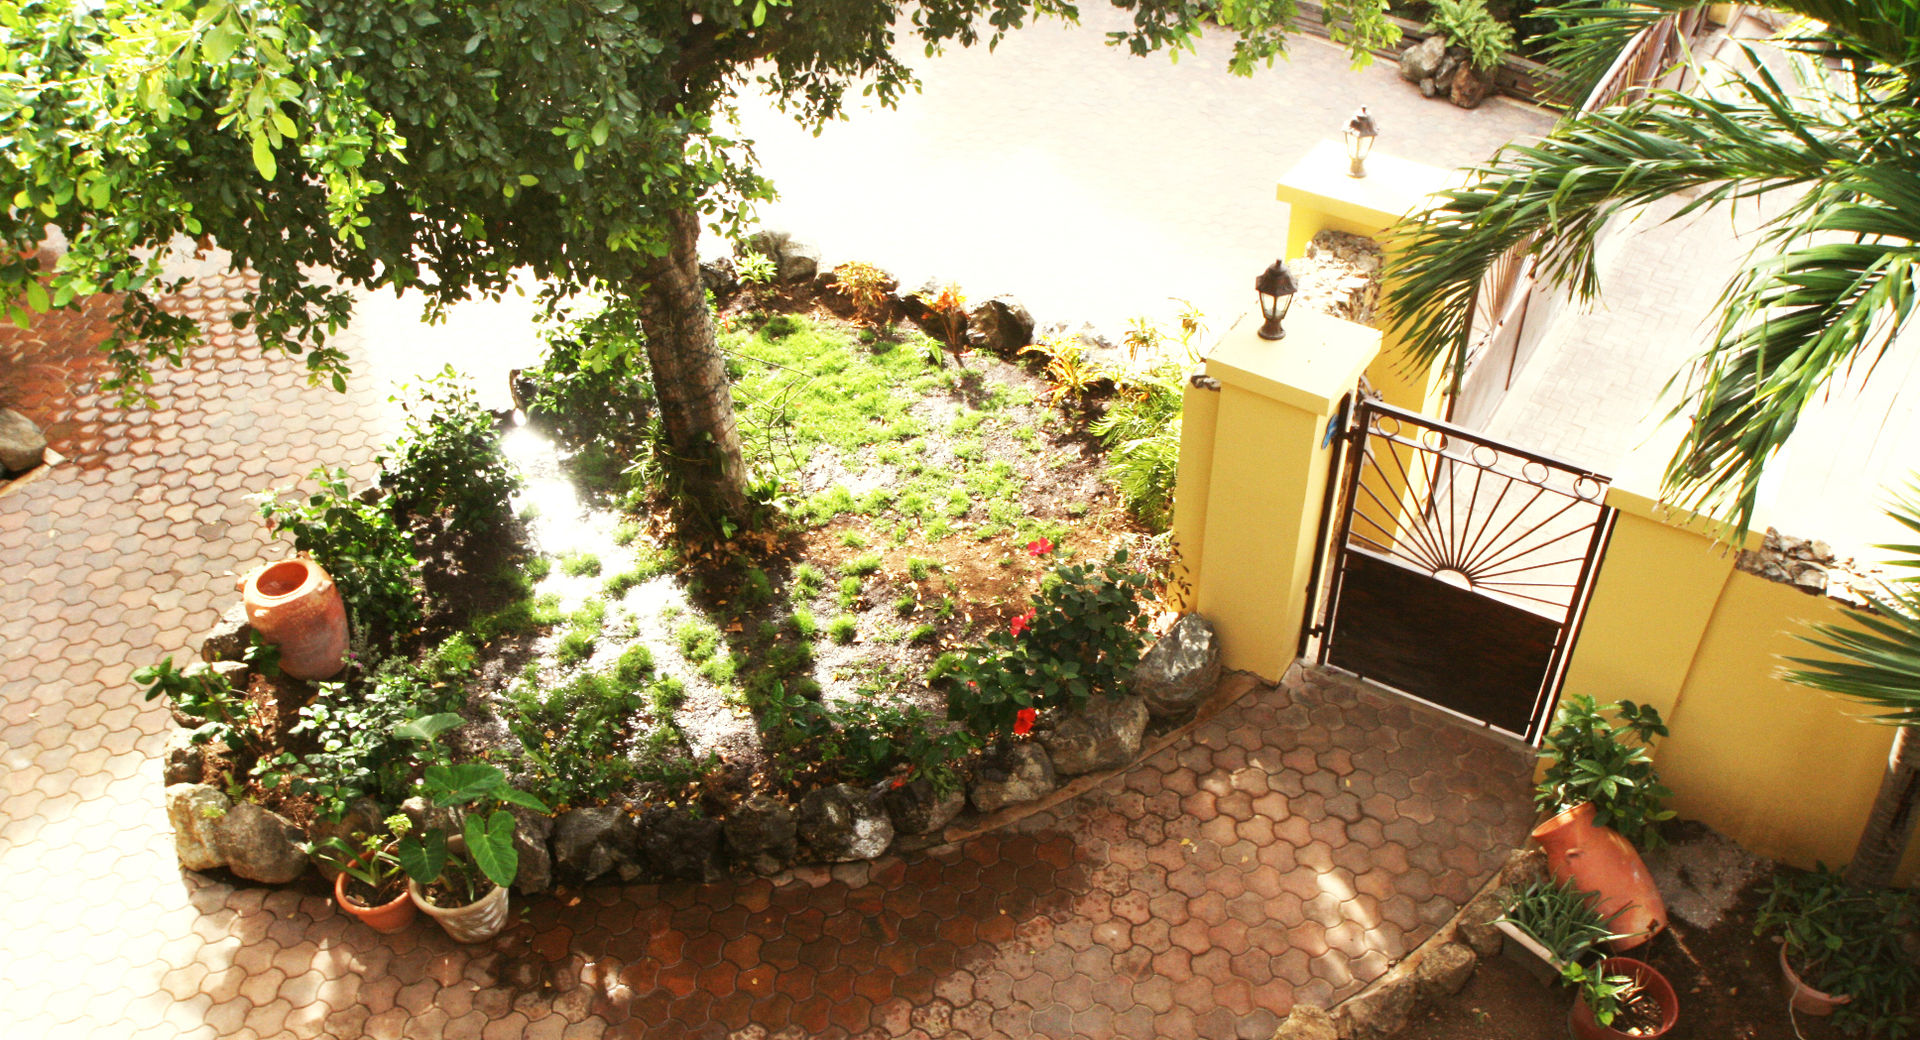 Casa Rokx, Willemstad Curaçao, architectenbureau Aerlant Cloin BNA architectenbureau Aerlant Cloin BNA Jardin tropical